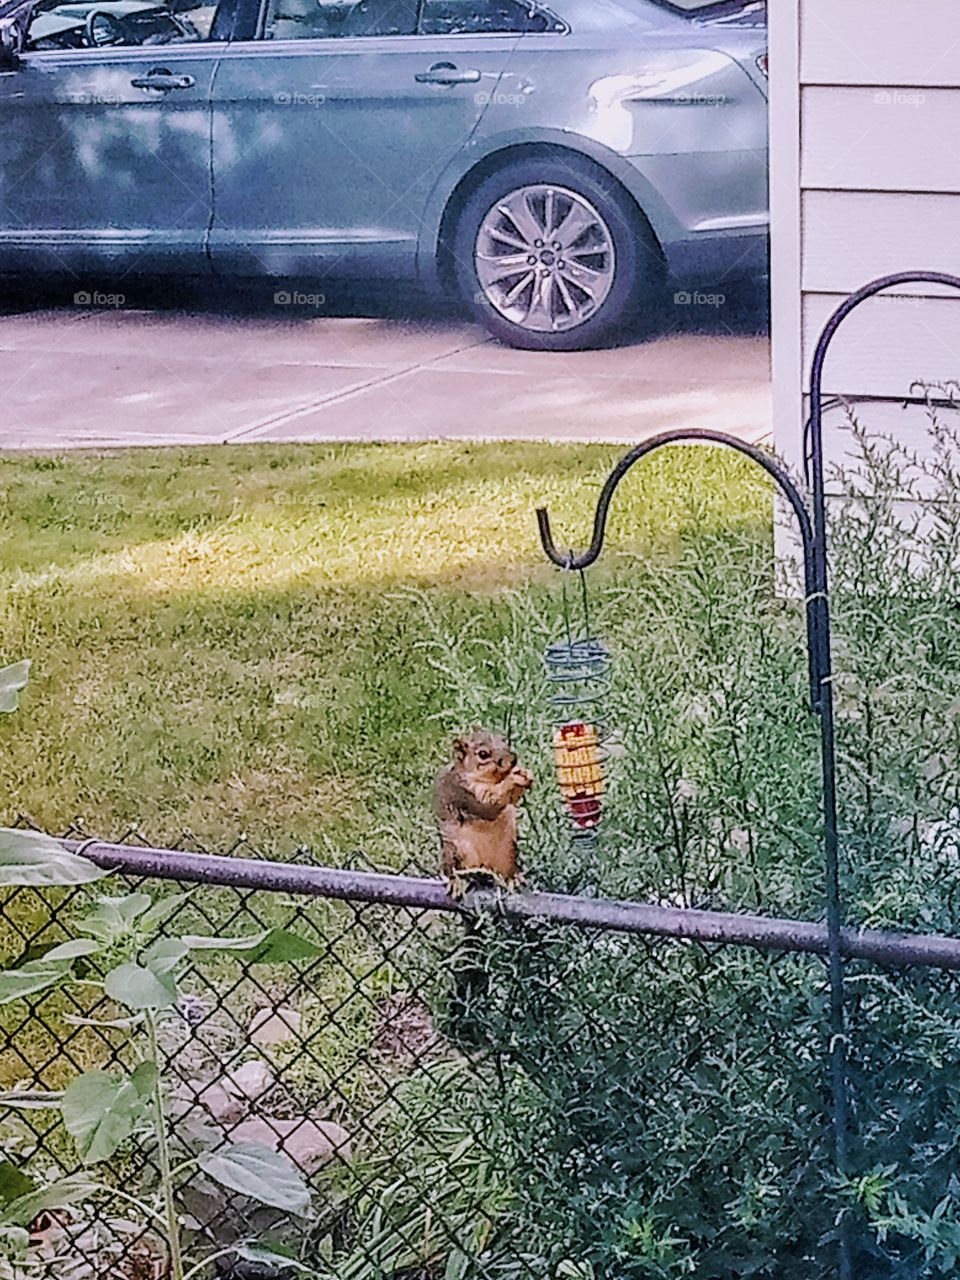 Corn feeder squirrel